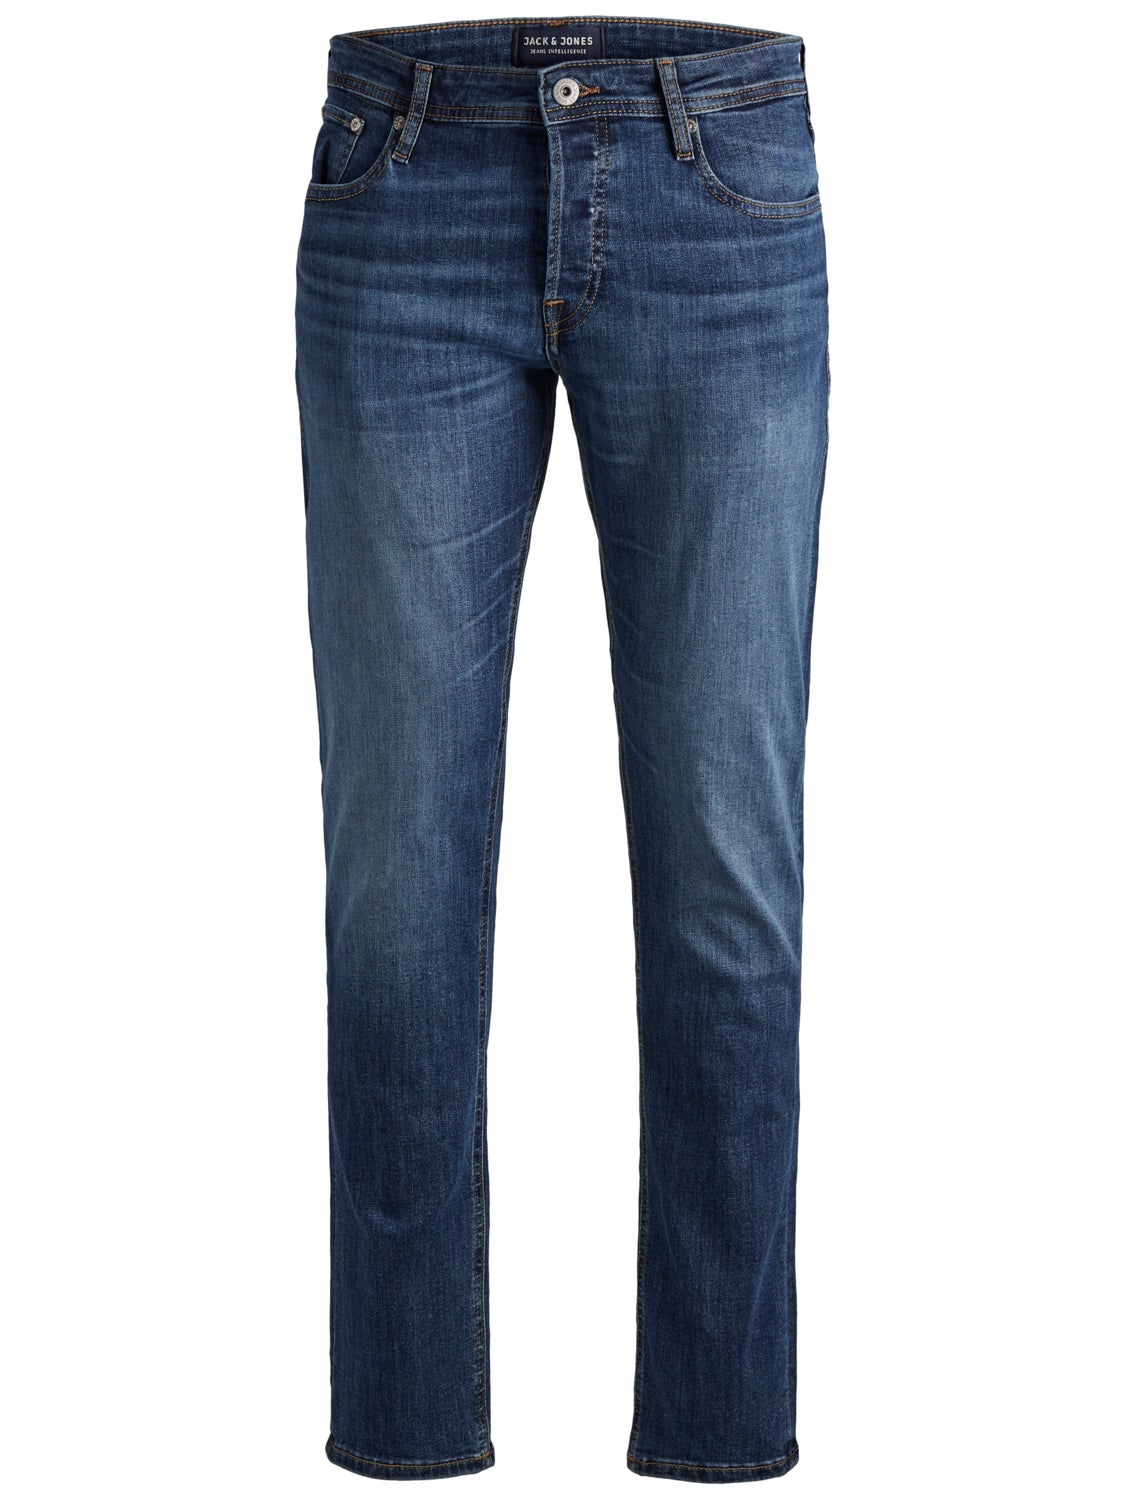 814 JJIMIKE fit Jack | NOOS Blue jeans AM Tapered & JJORIGINAL | Jones® Medium